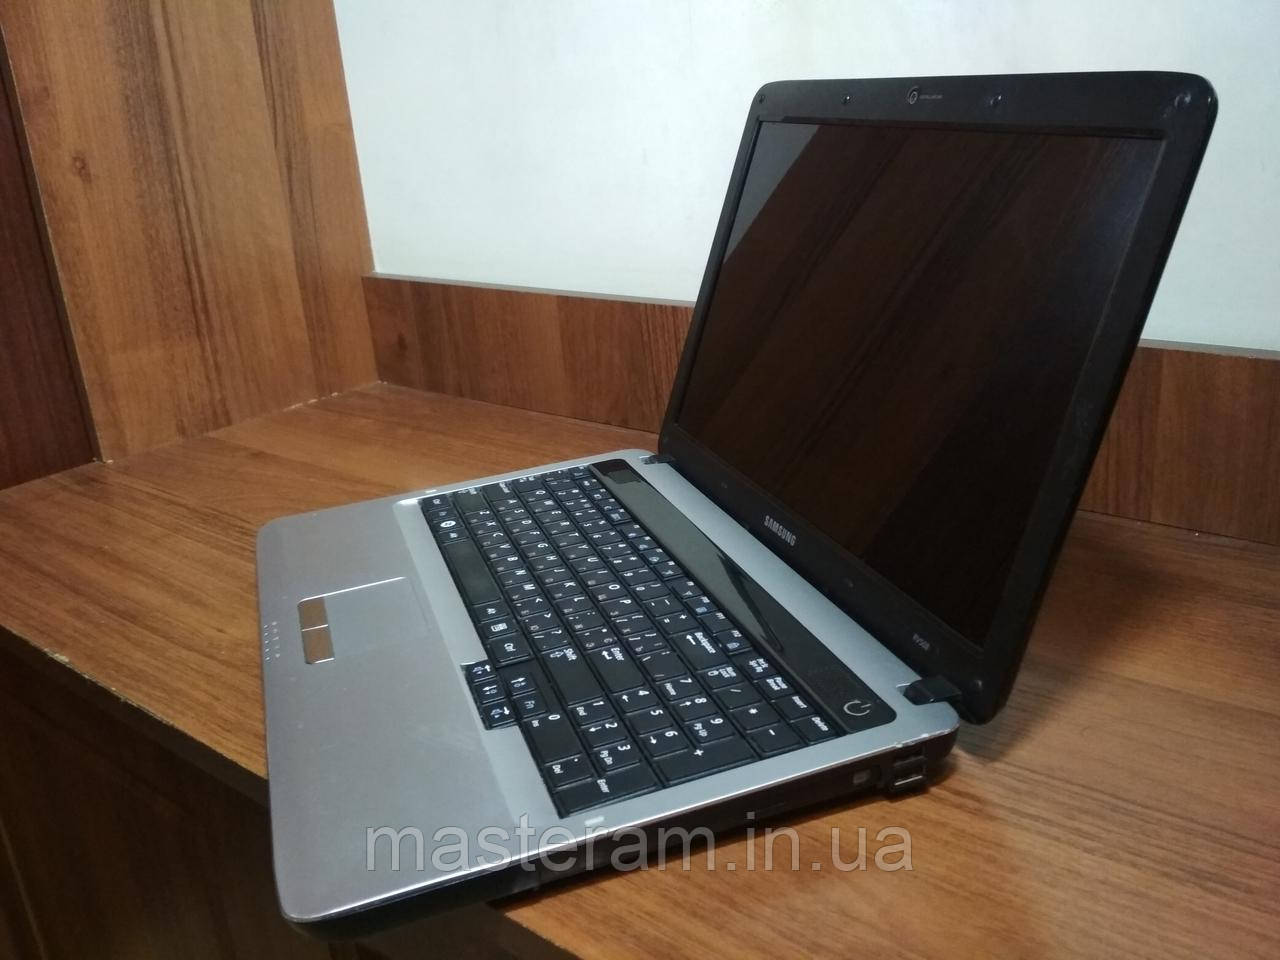 Купить Ноутбук Самсунг Rv508